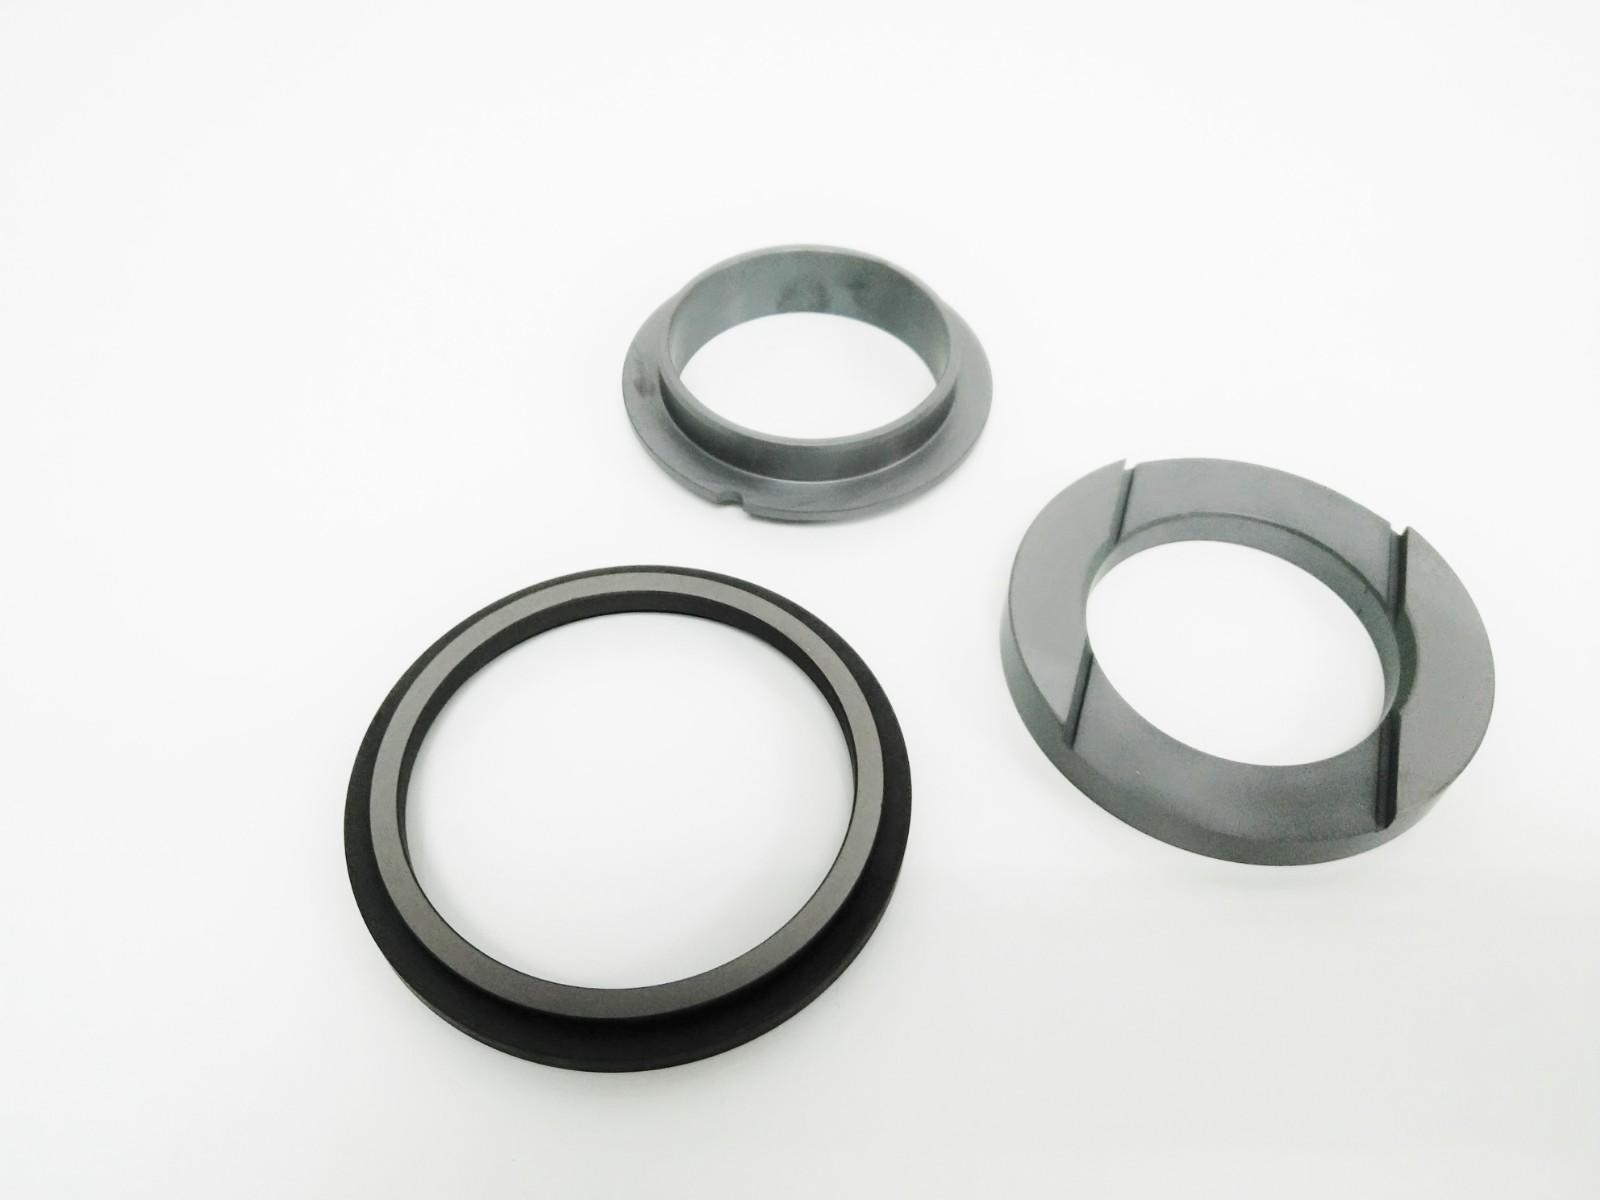 Lepu durable fristam pump seals OEM for high-pressure applications-1